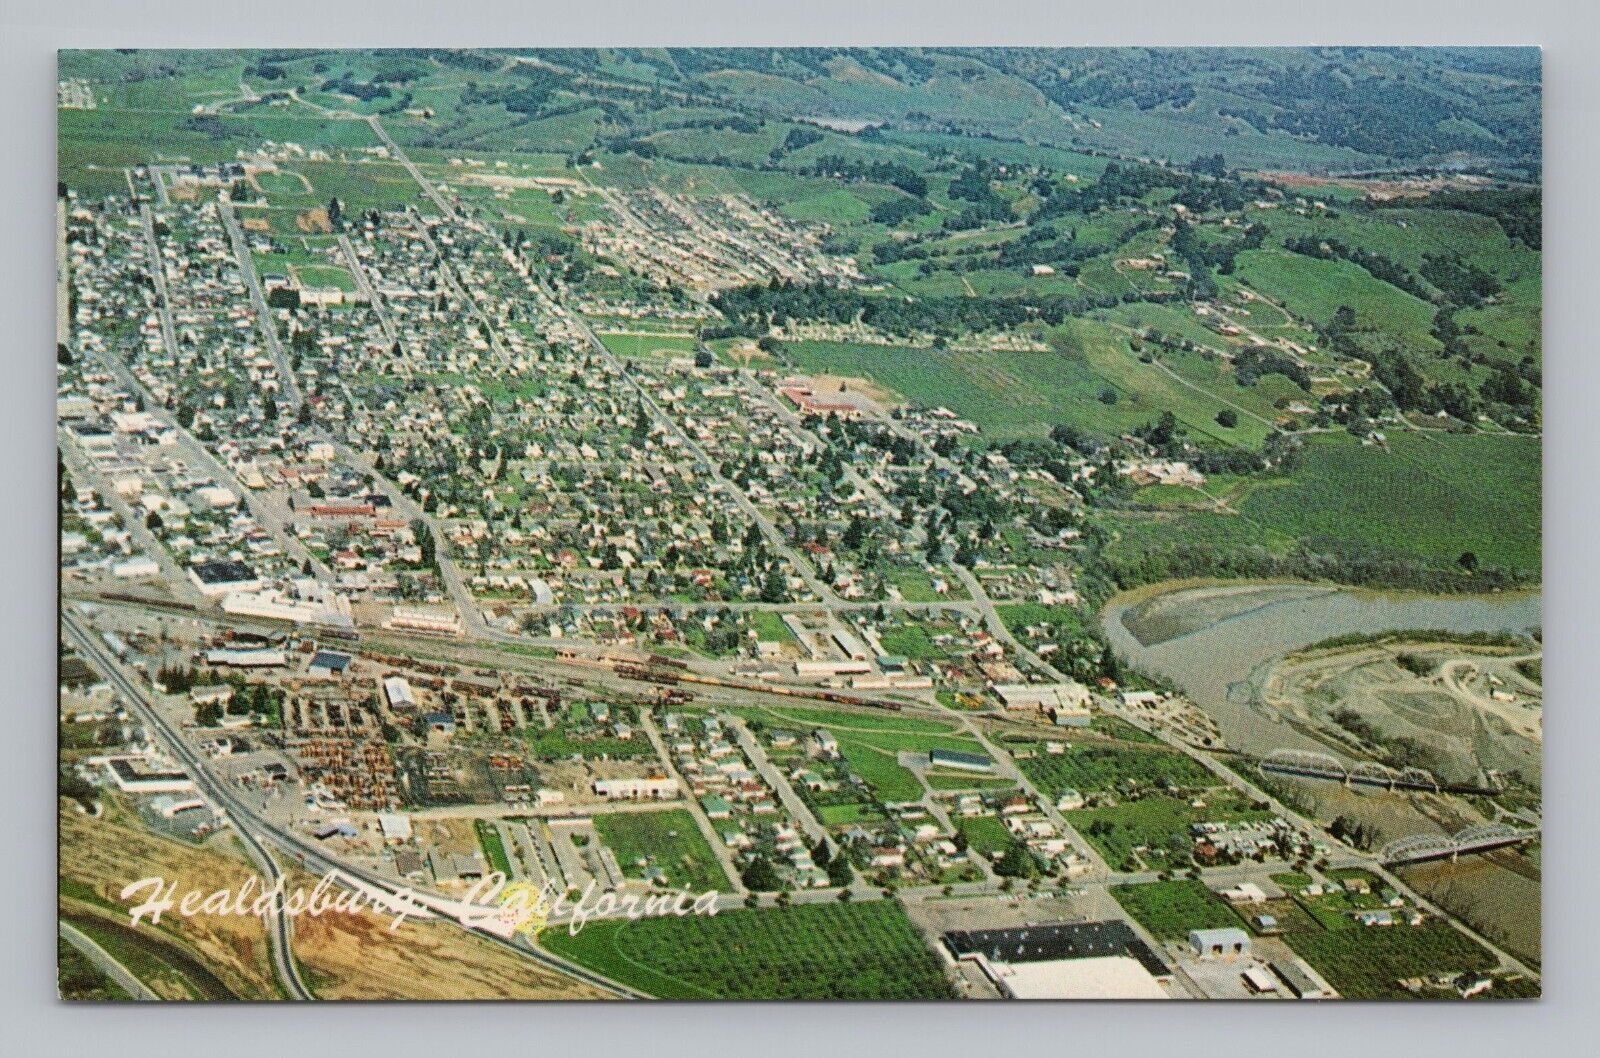 Postcard Aerial View City of Healdsburg California